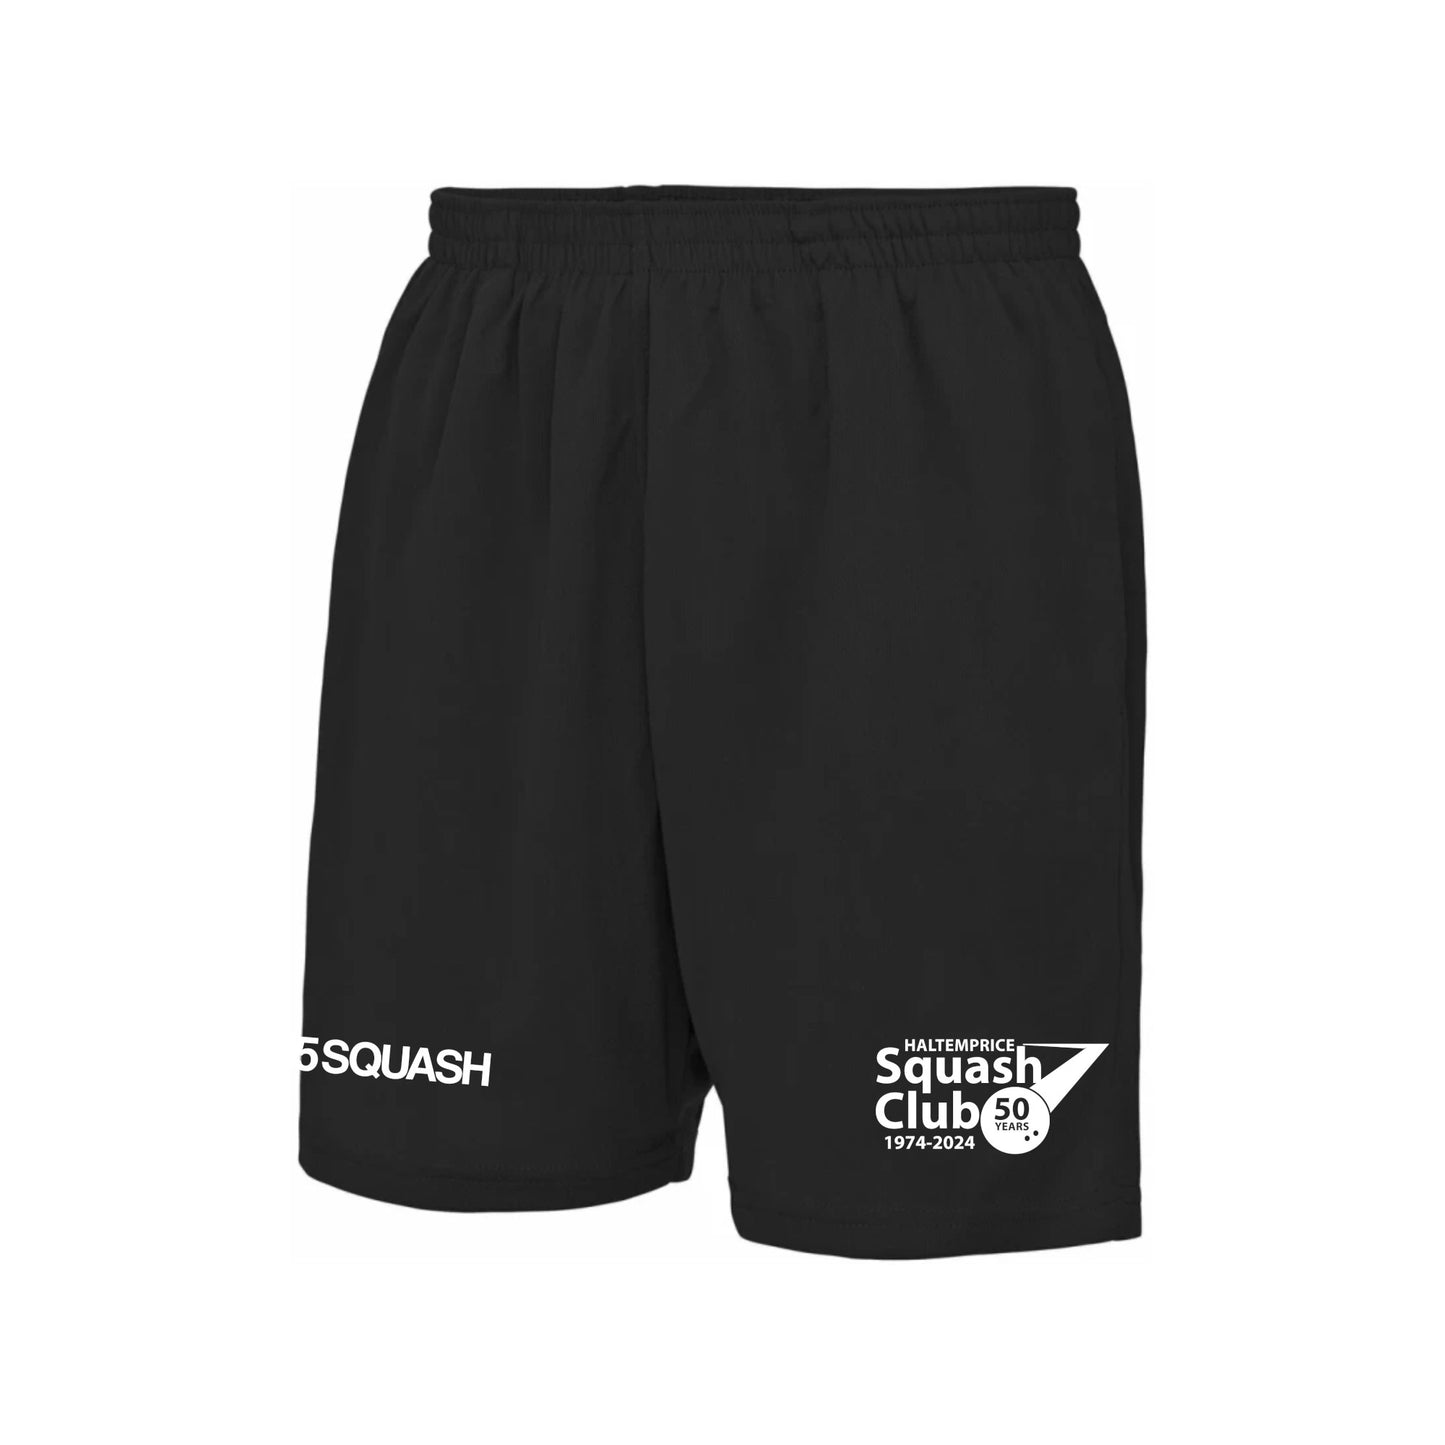 Haltemprice Squash Action Shorts